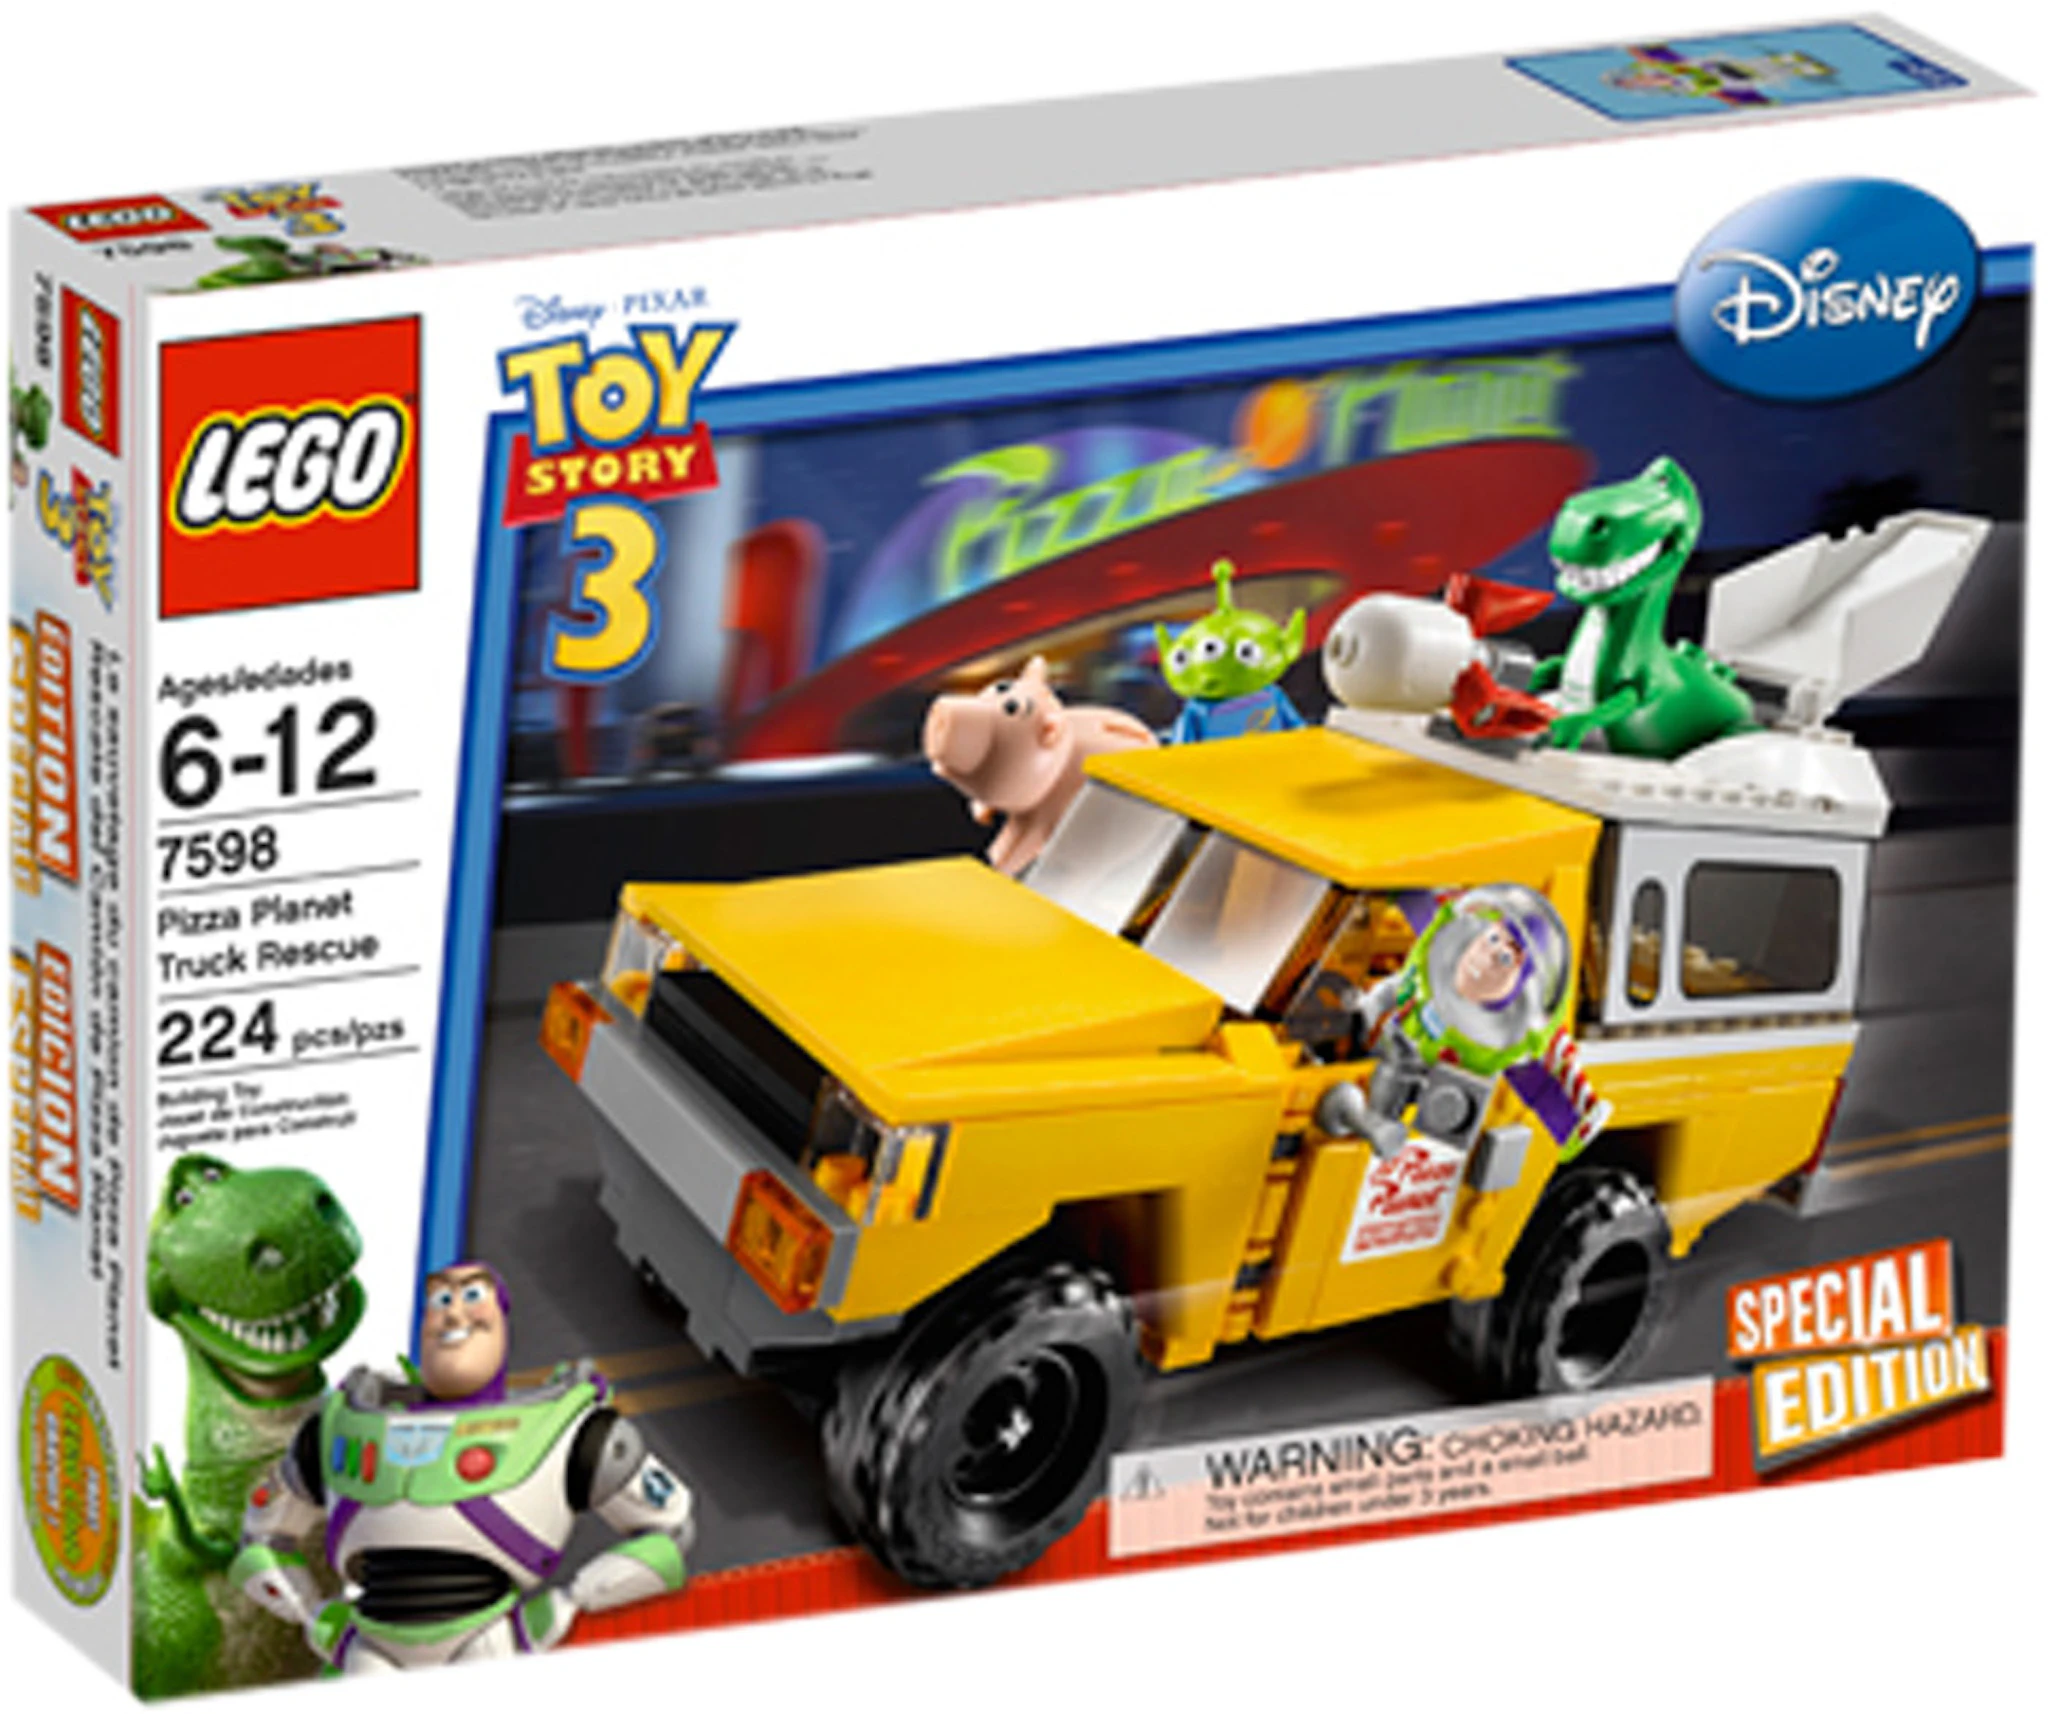 Armada Como Residencia LEGO Toy Story Pizza Planet Truck Rescue Set 7598 - ES